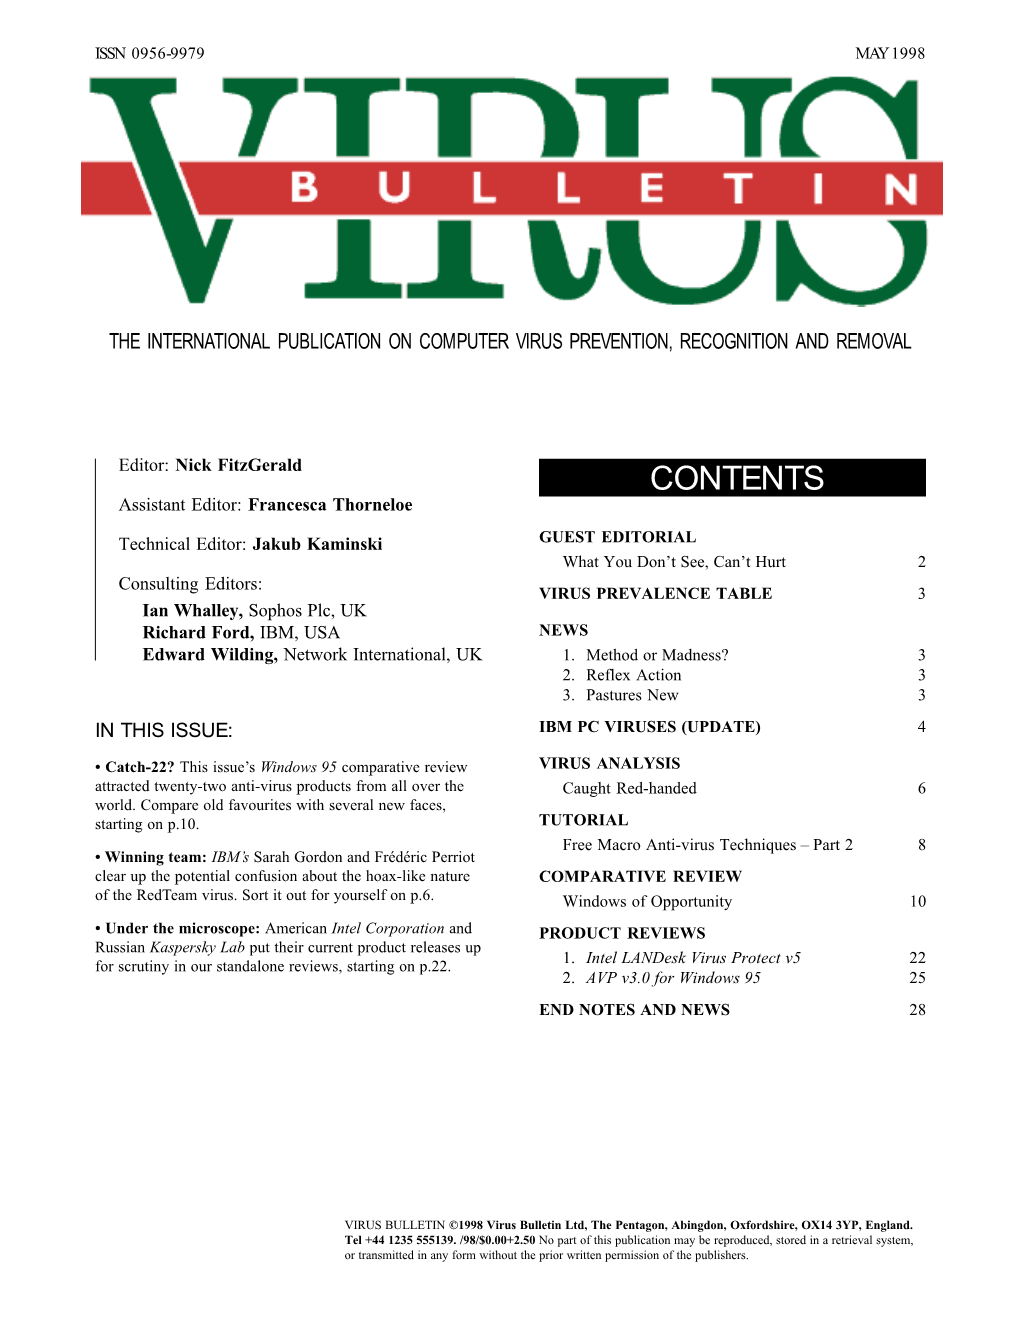 Virus Bulletin, May 1998